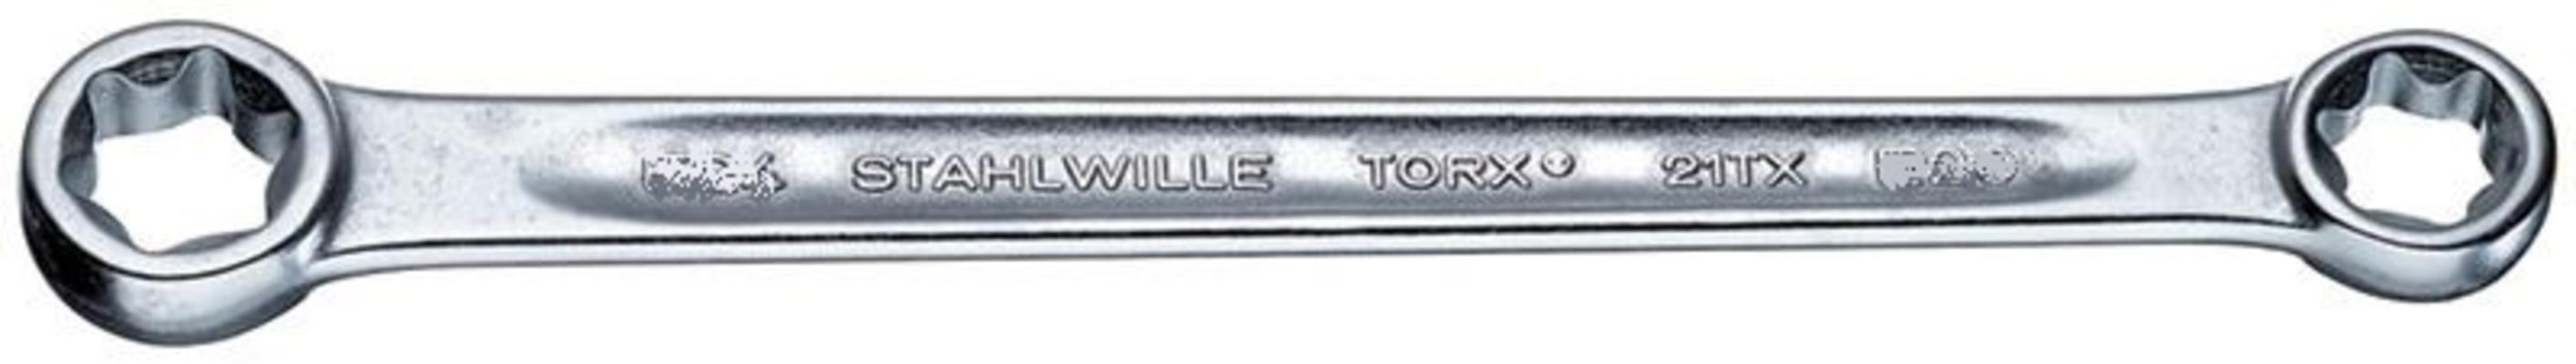 Torx-silmukka-avain, Stahlwille - Silmukka-avain E6 x E8, pituus 115,5 mm